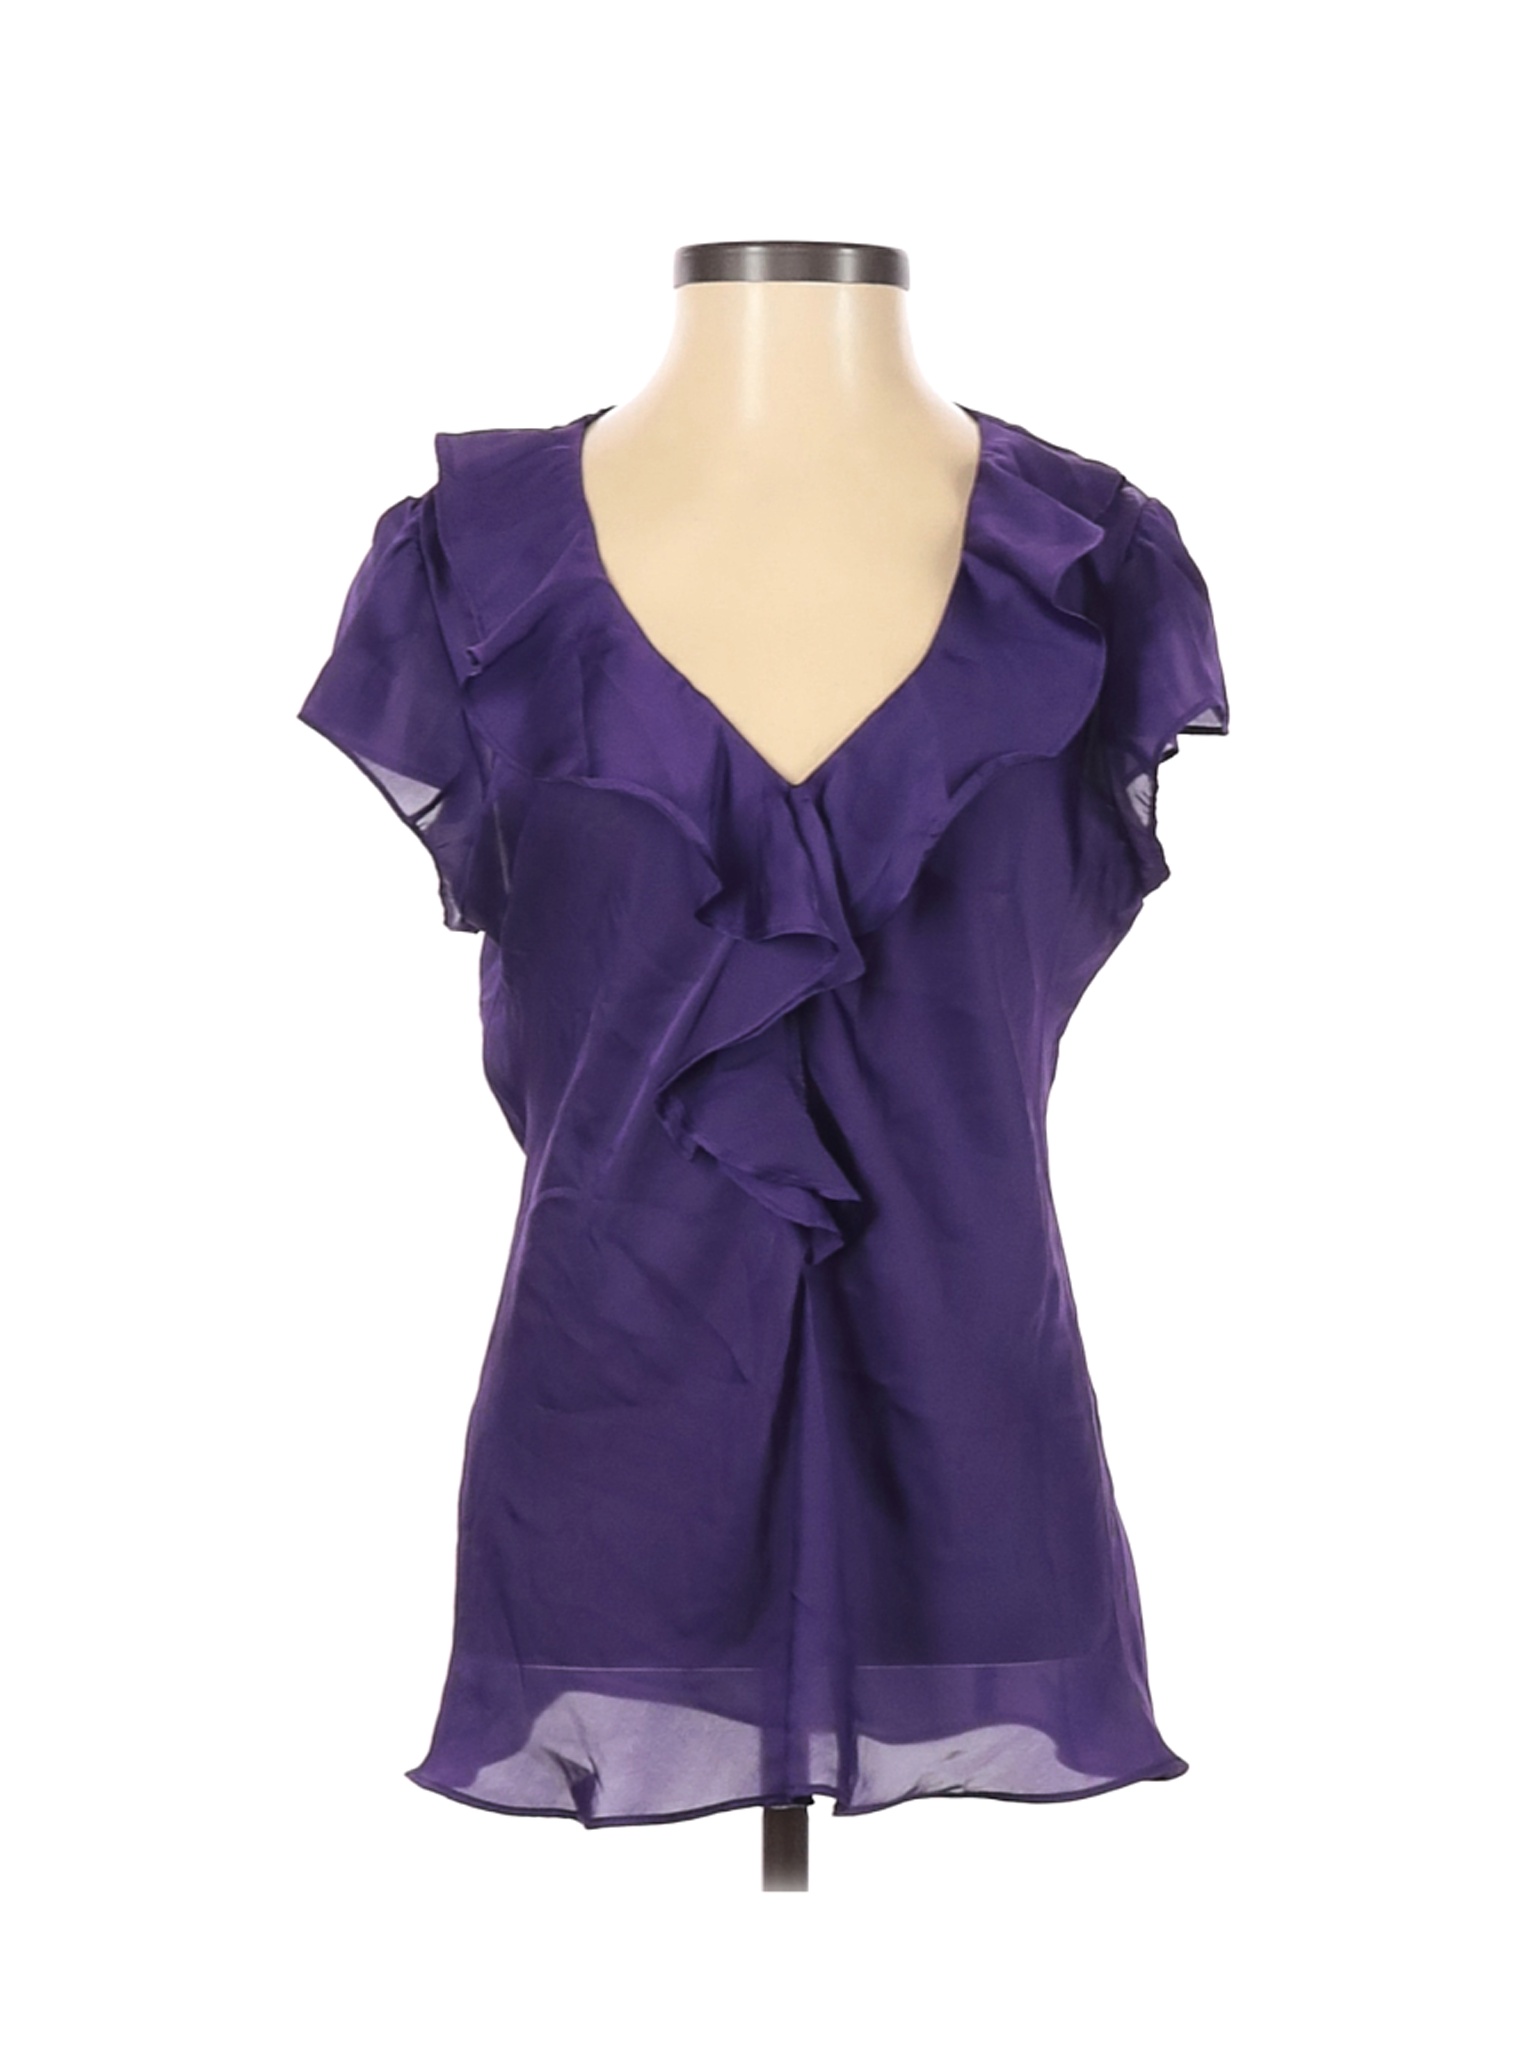 Allison Taylor Women Purple Short Sleeve Blouse S | eBay